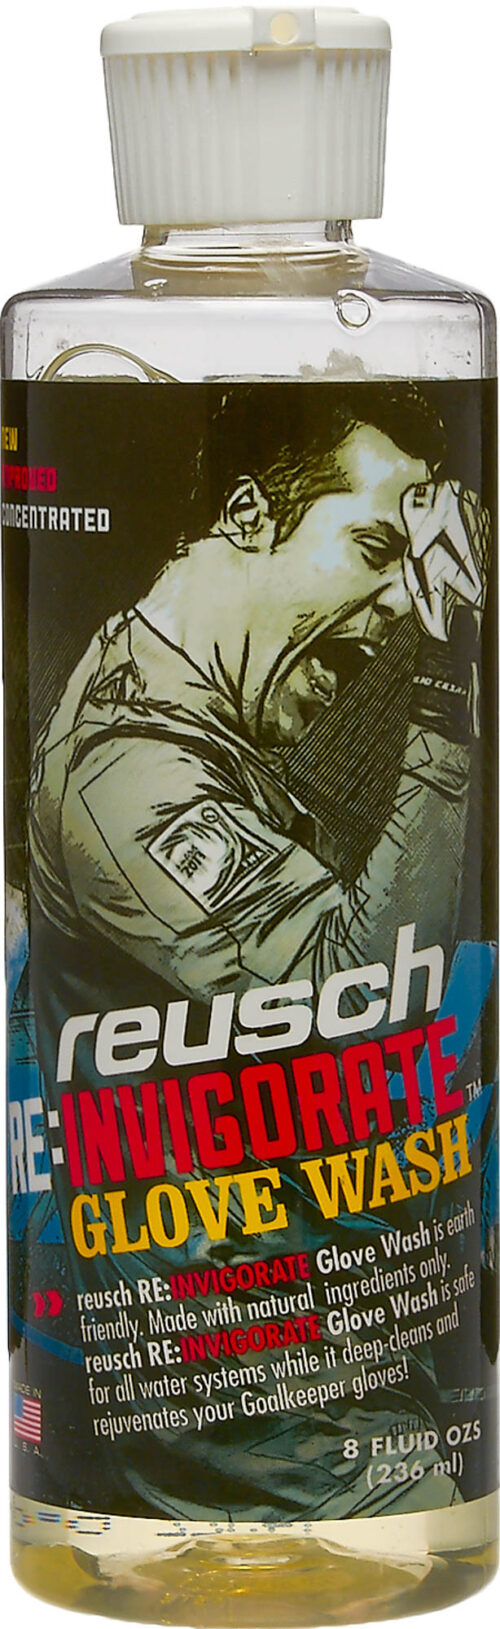 Reusch Re-Invigorate Glove Wash